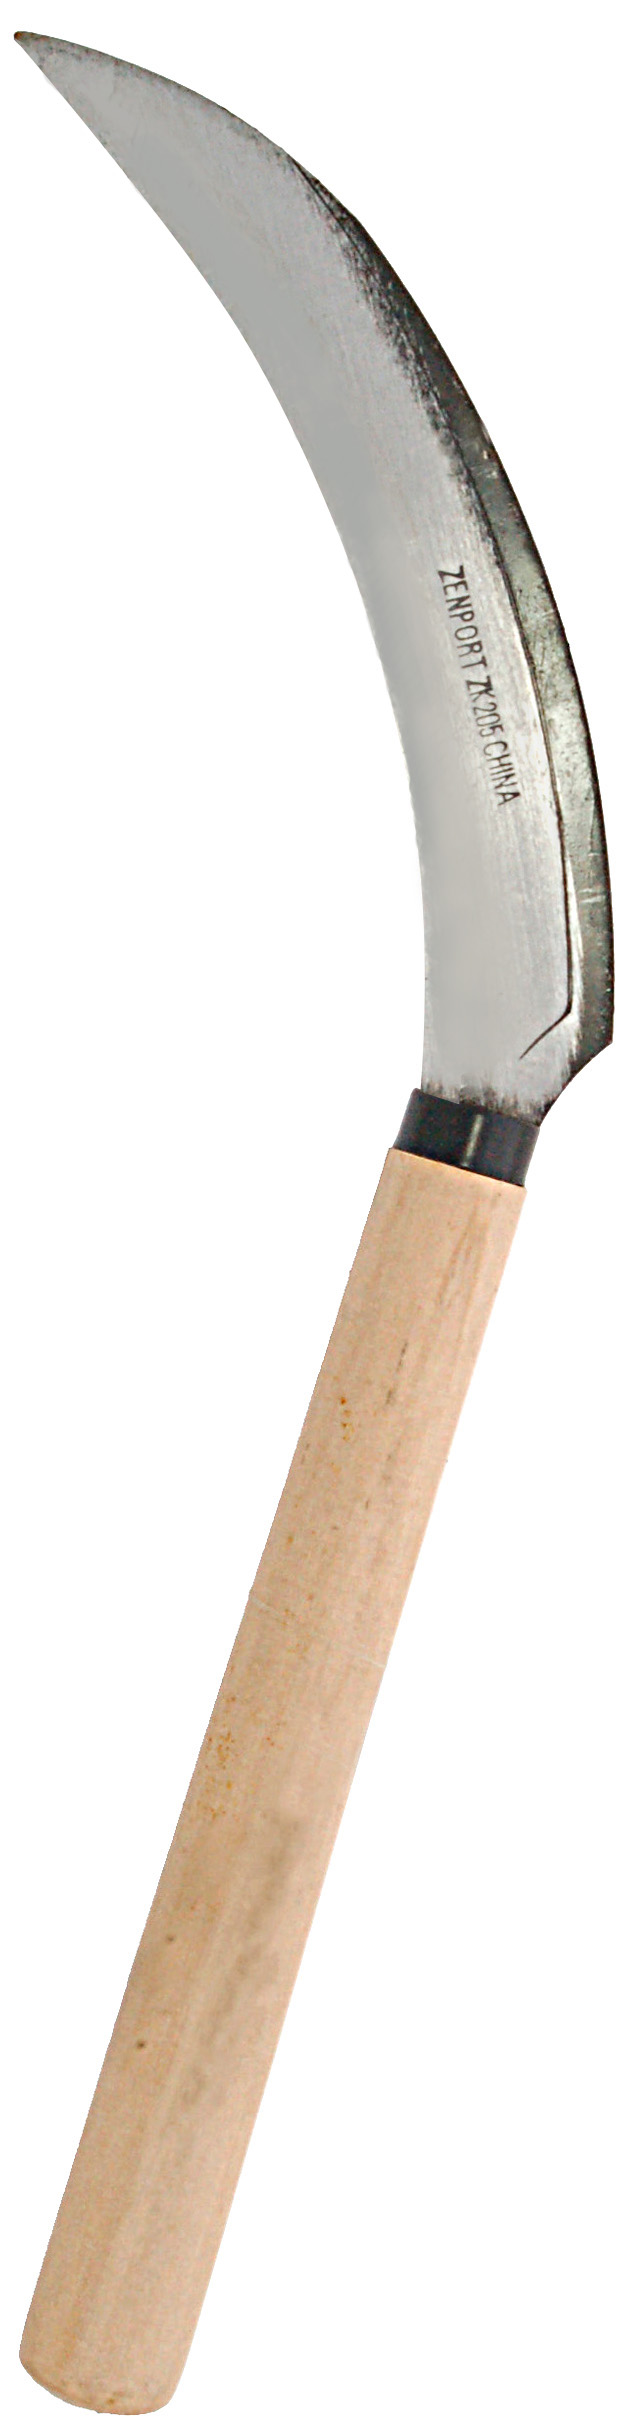 Zenport Sickle K205NS Harvest Knife Weeding, Berry, Lavender, Vegetable, Landscape, Wood Handle, Straight Edge, 6.5-Inch Blade